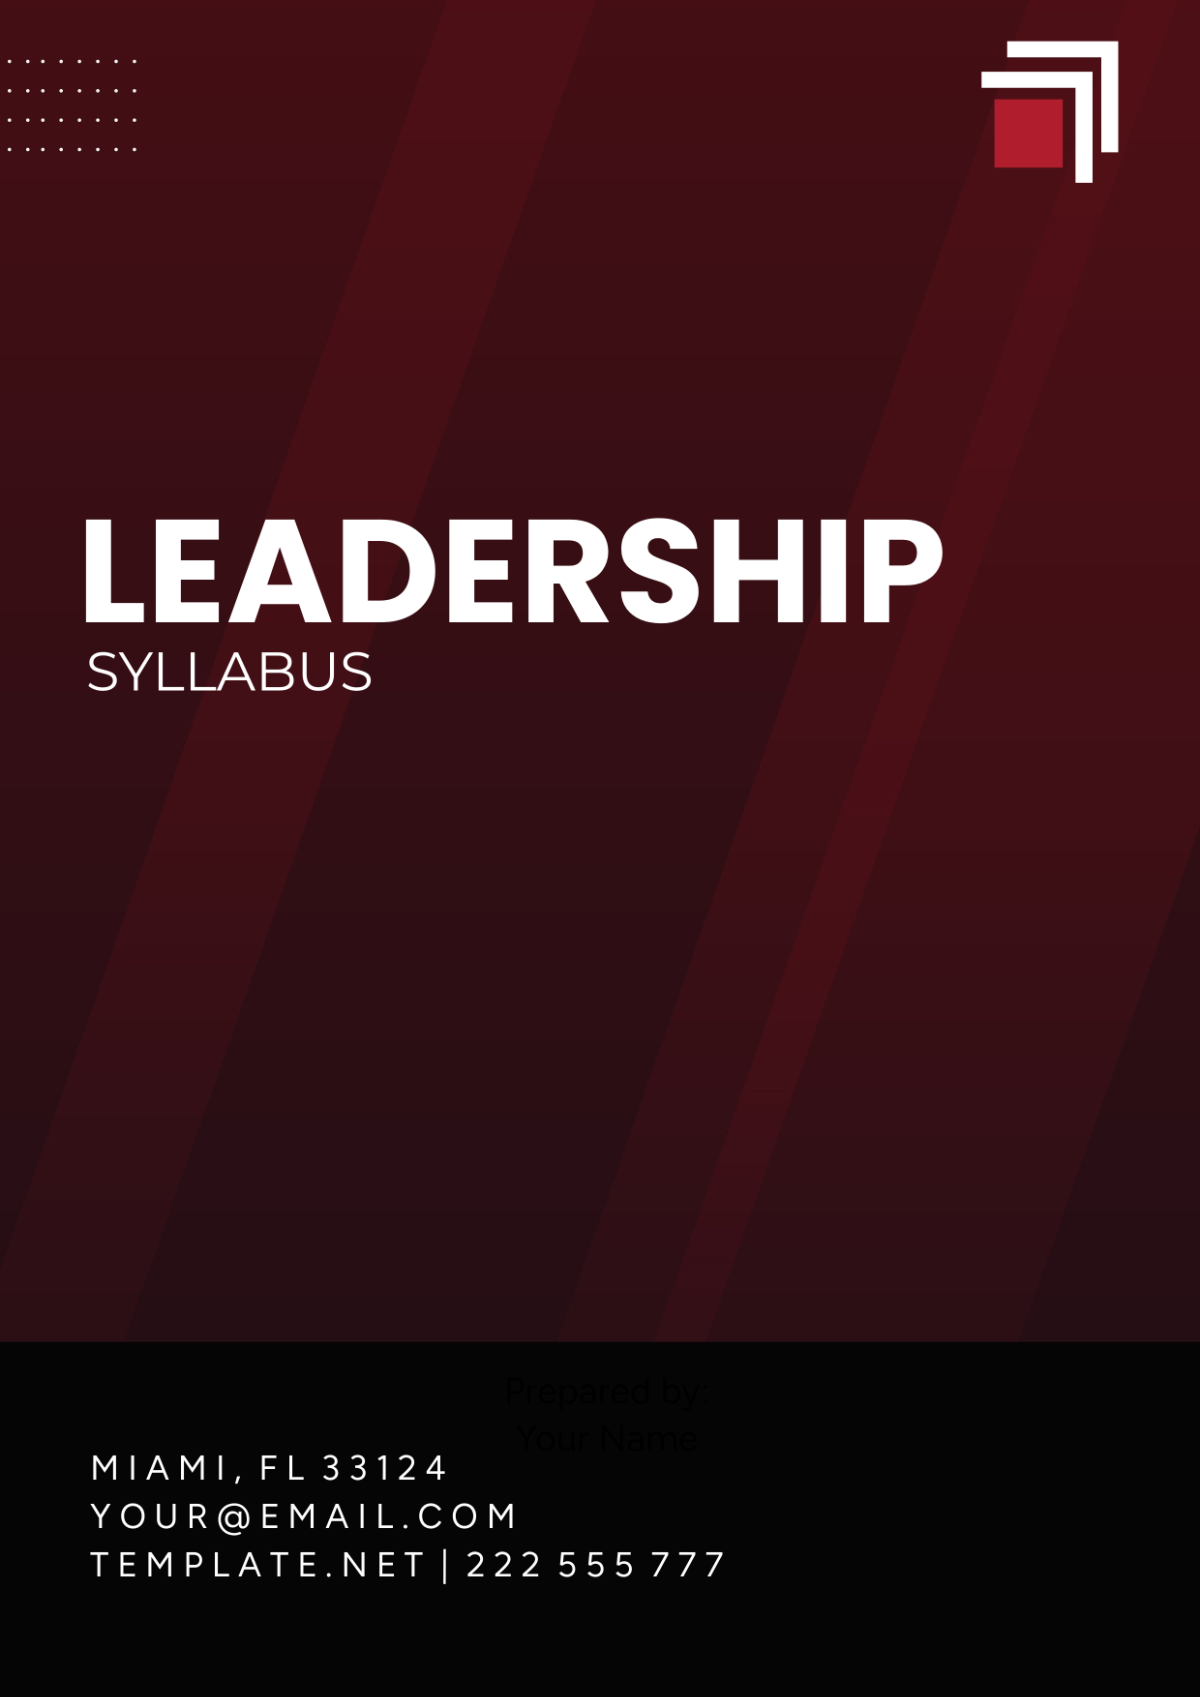 Leadership Syllabus Template